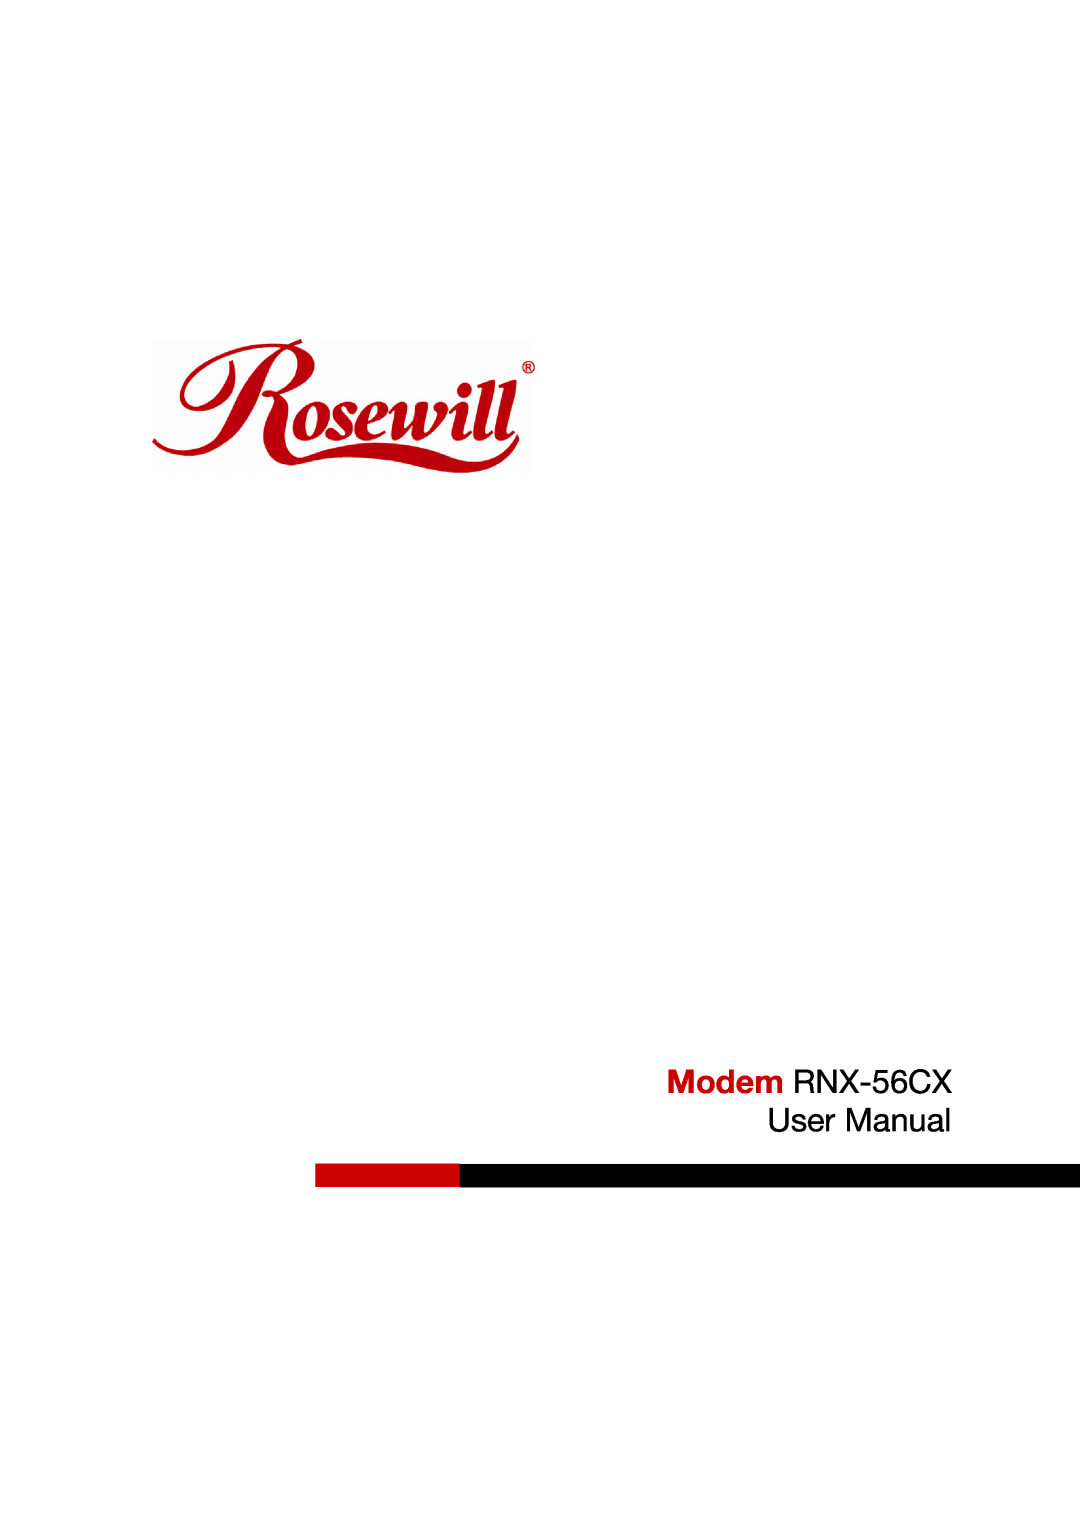 Rosewill user manual Modem RNX-56CX User Manual 